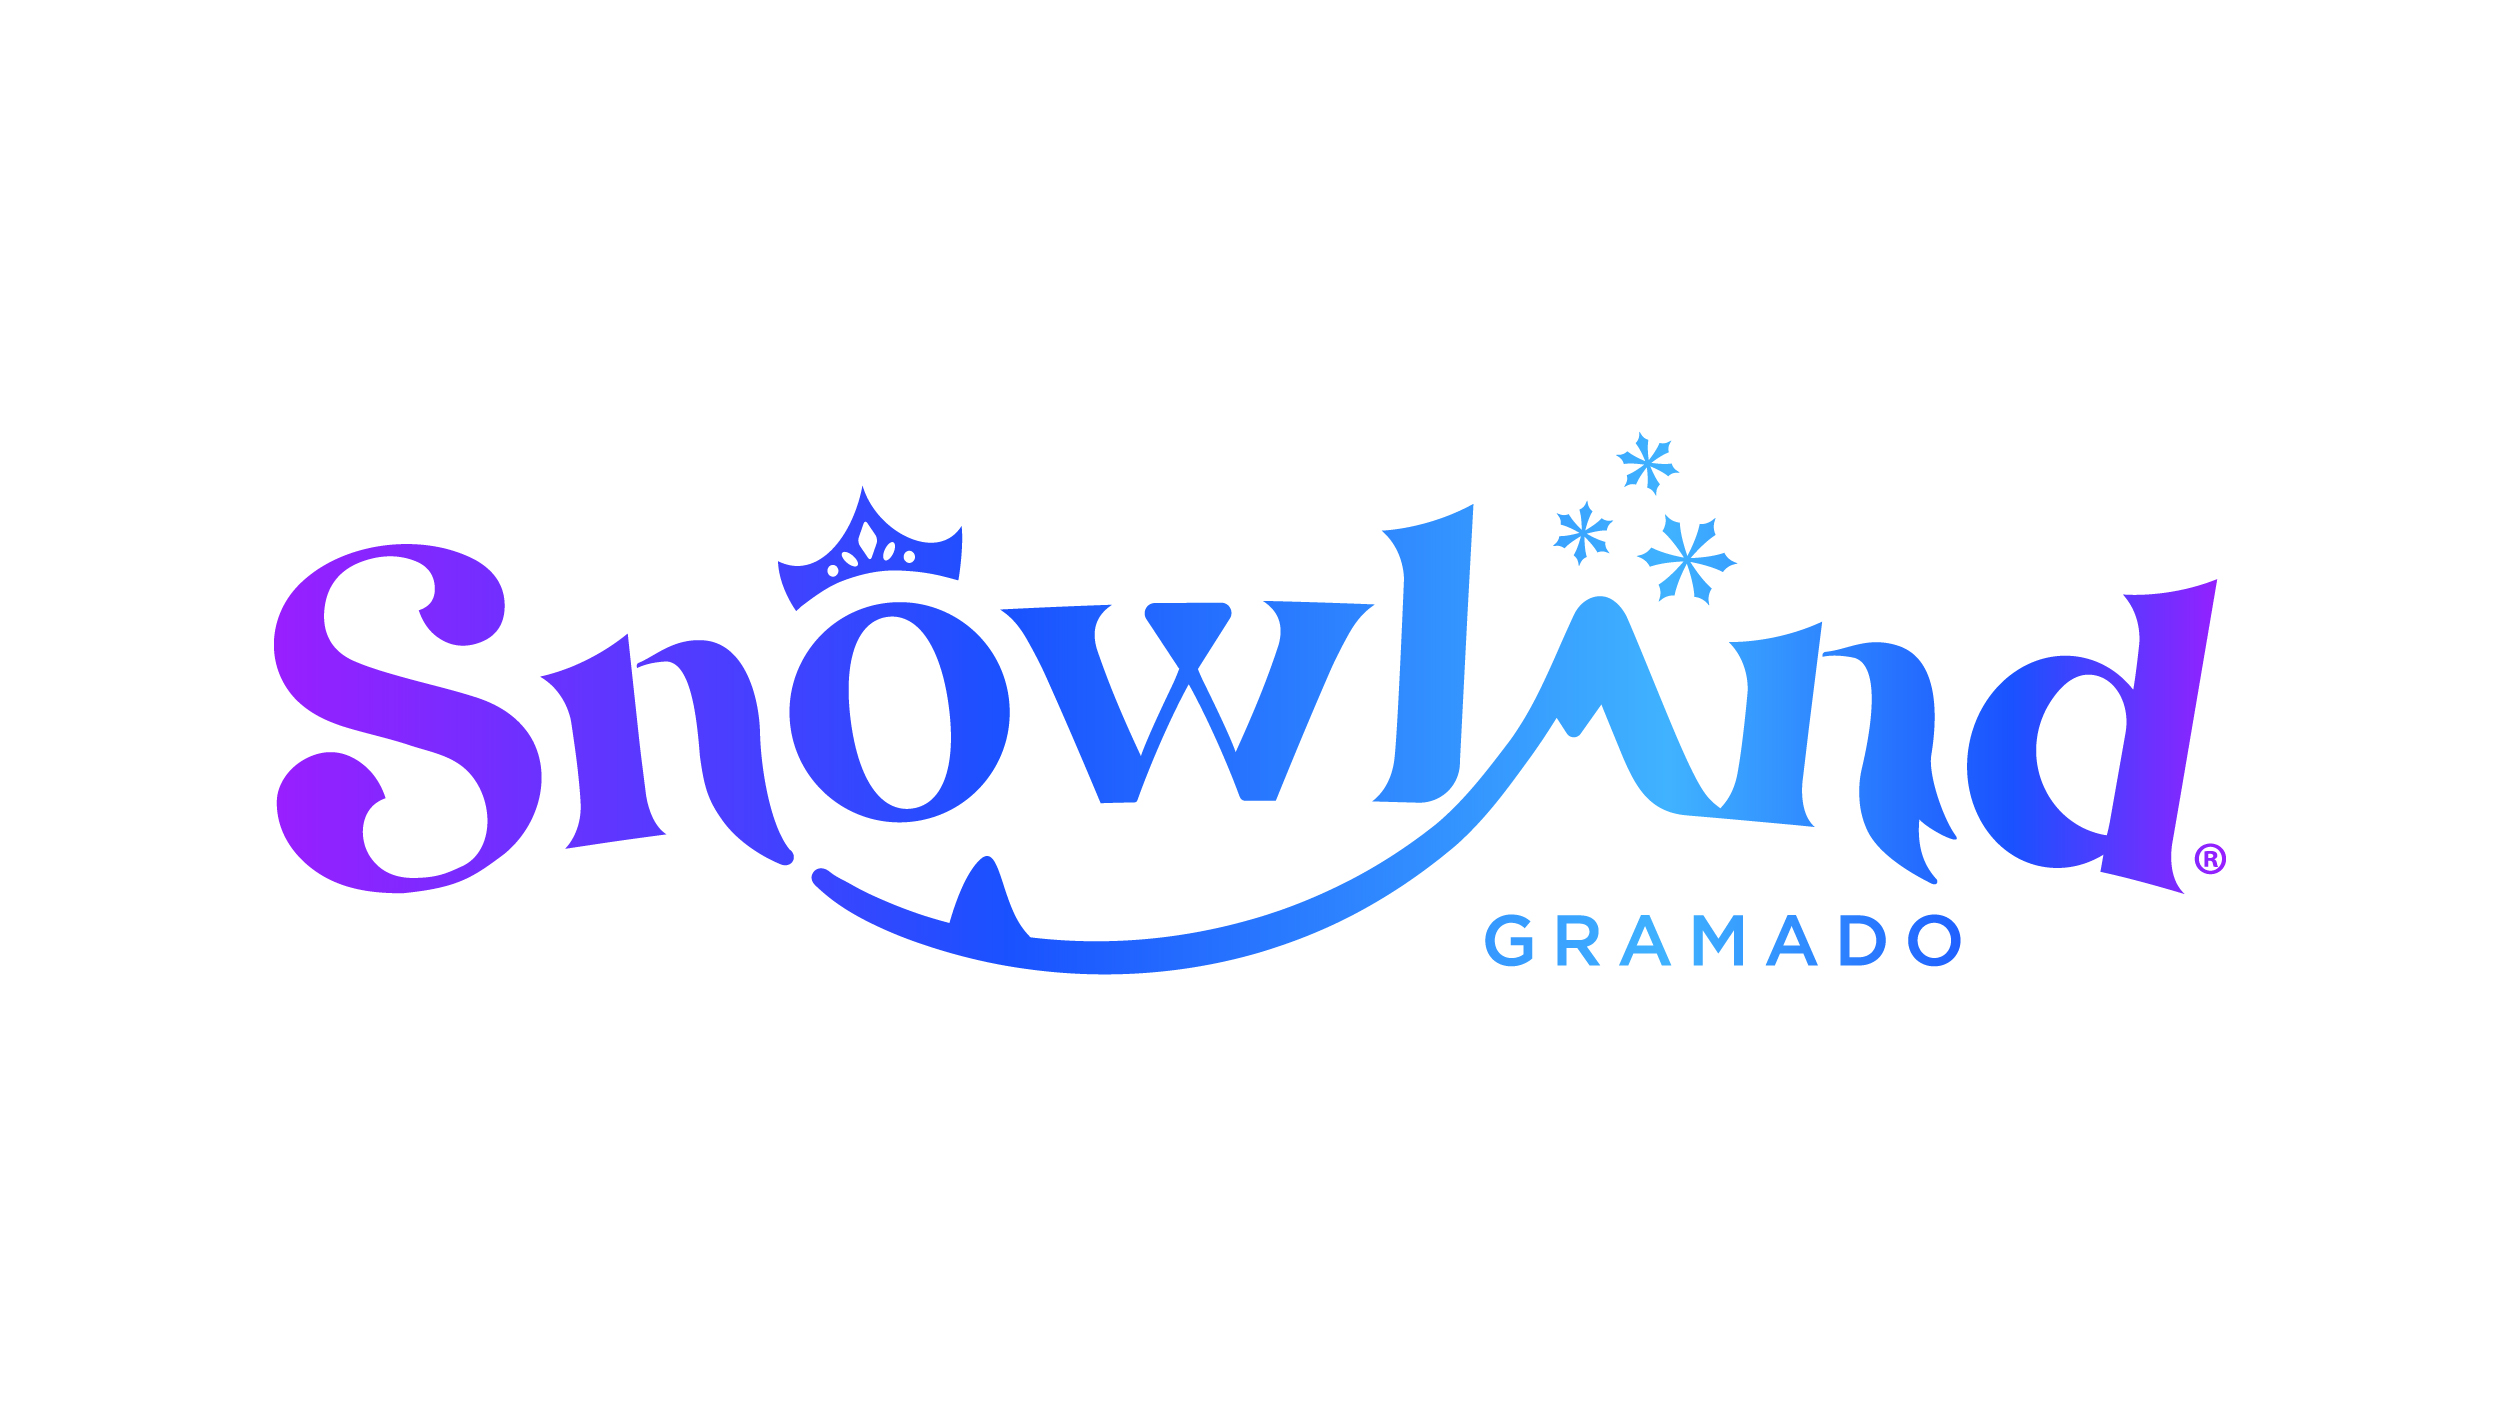 SNOWLAND - Gramado & Canela Convention & Visitors Bureau